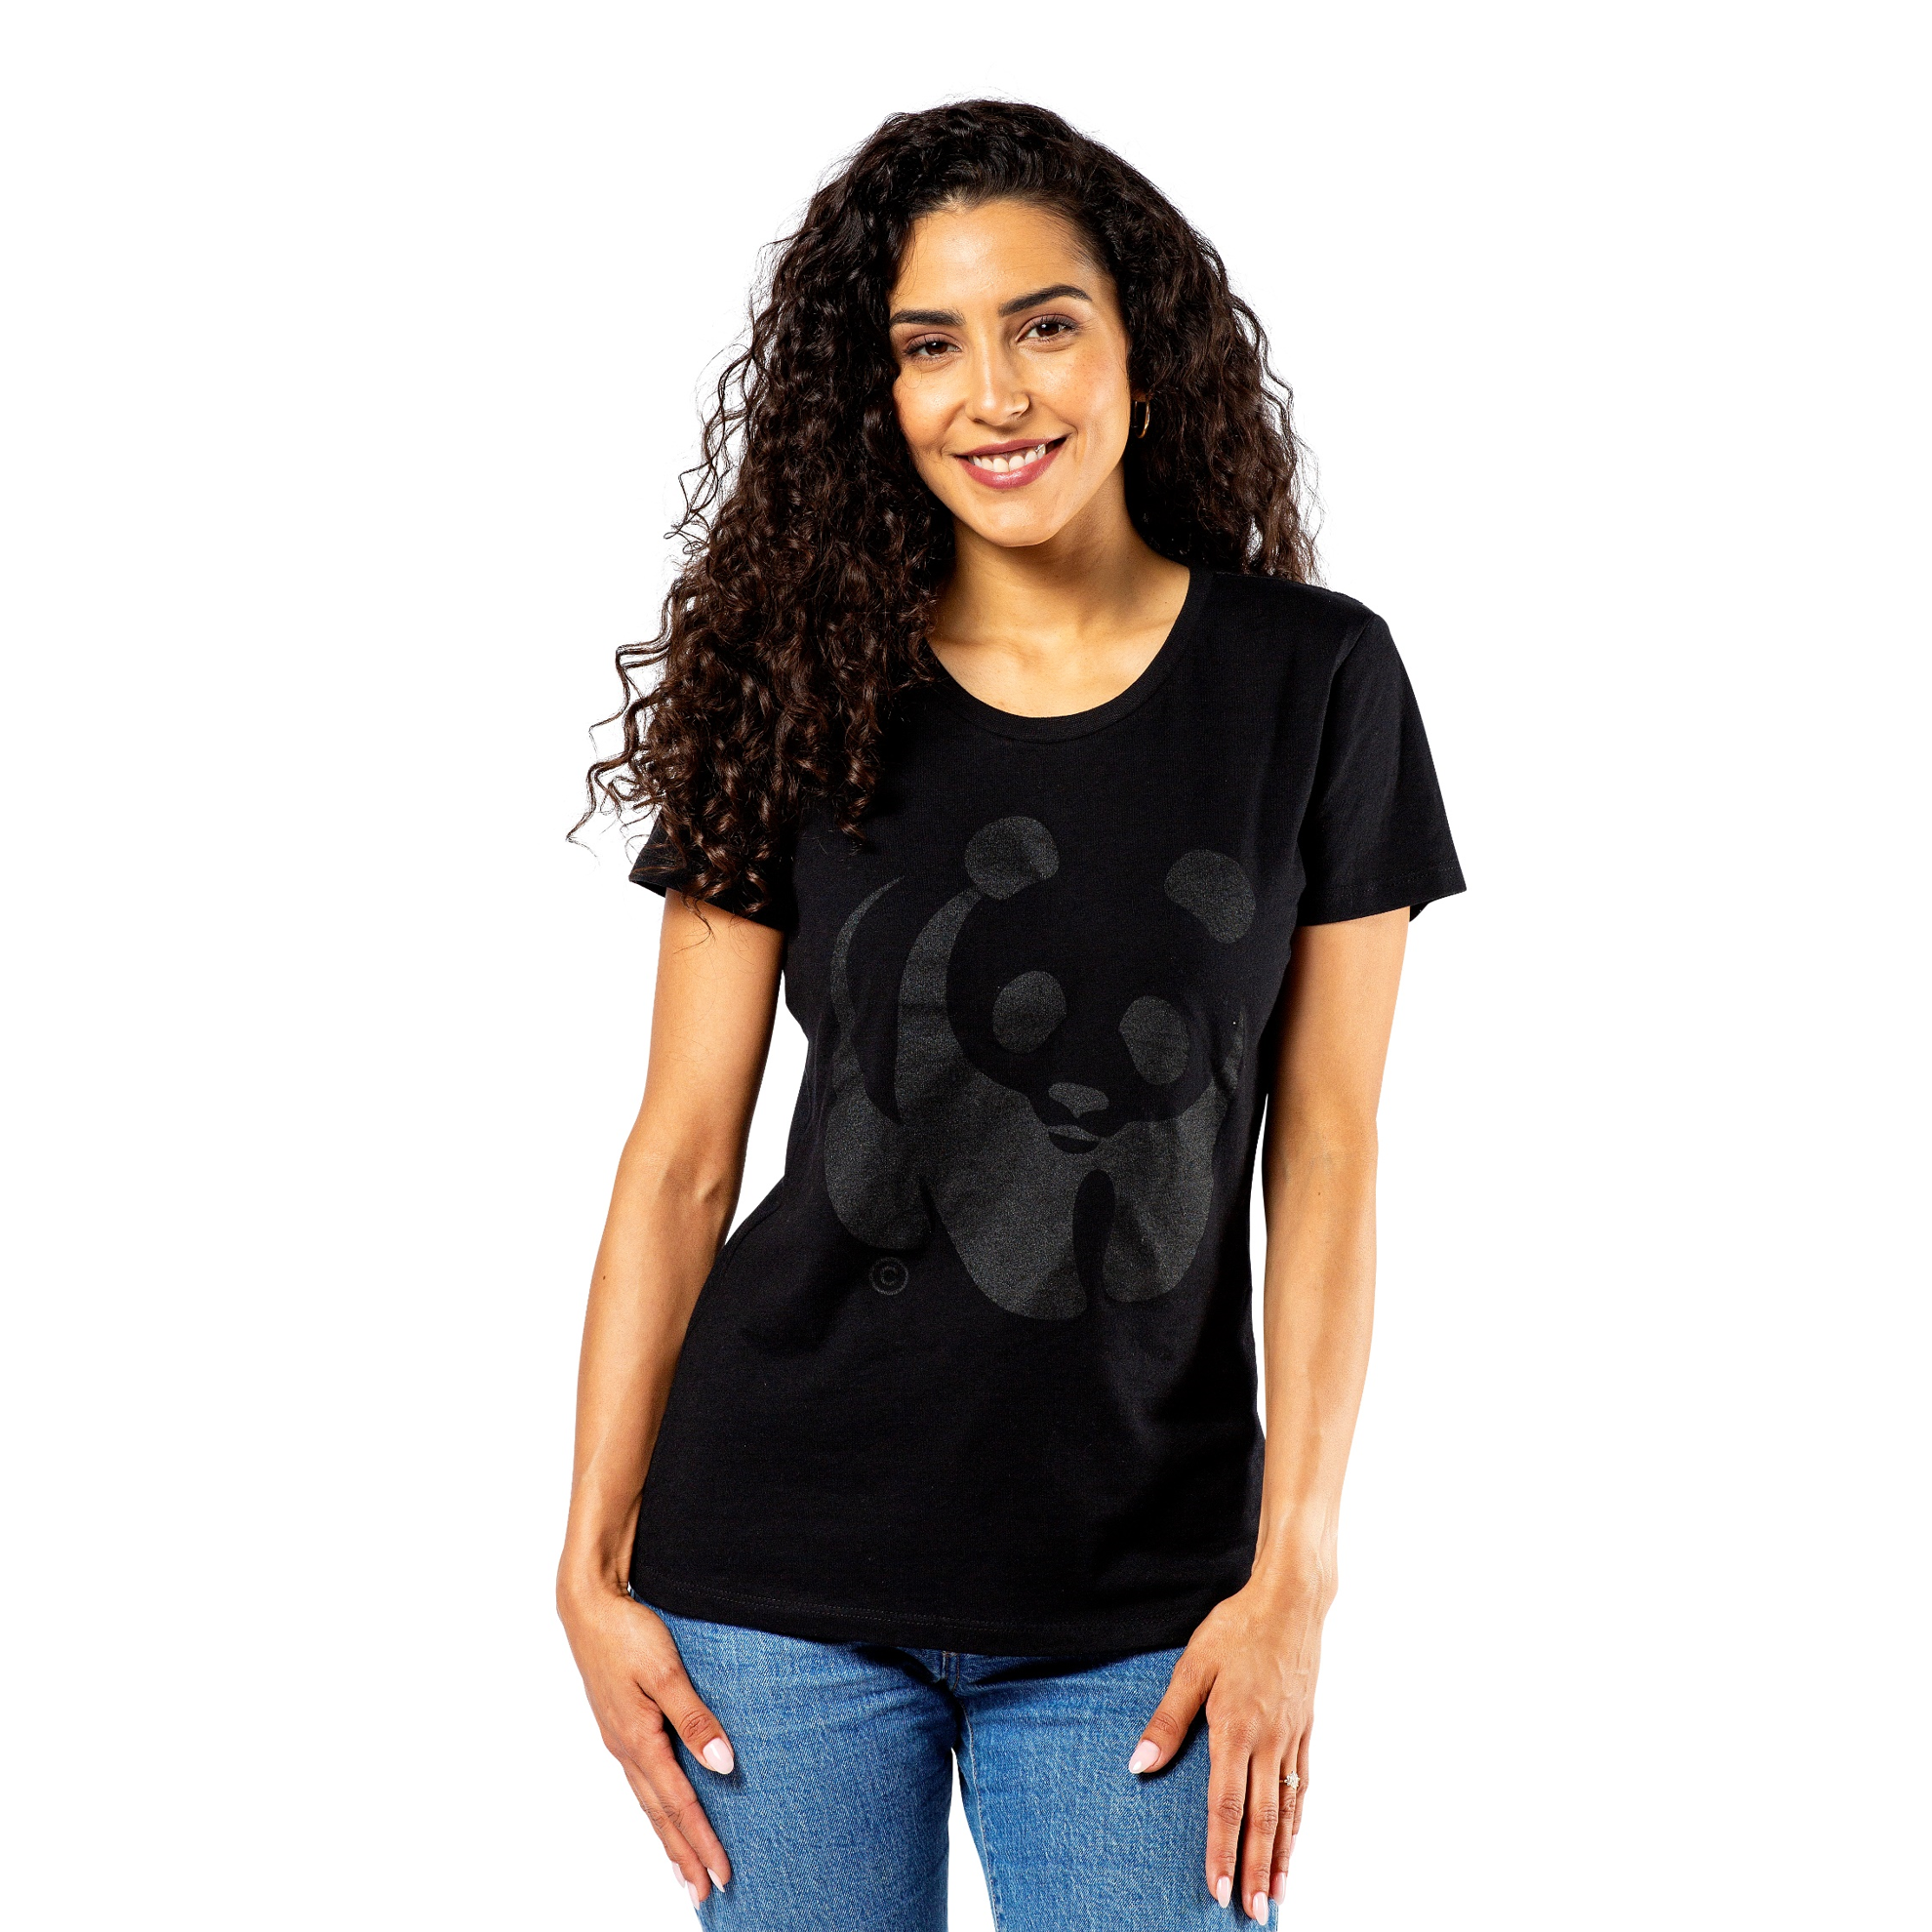 Female modelling the women's black t-shirt featuring the panda logo